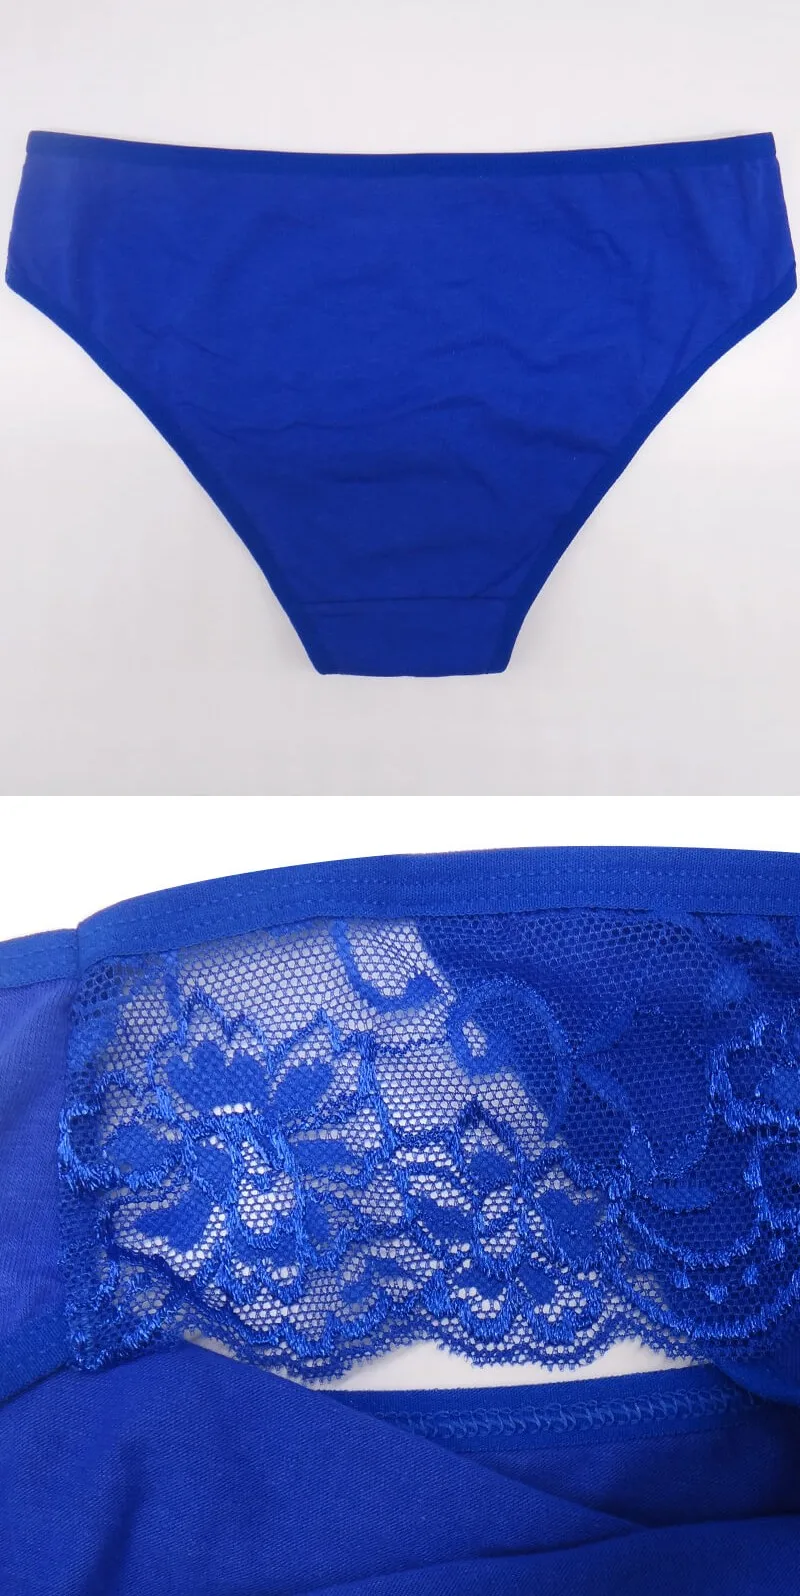 Yun Meng Ni Underwear Fancy Lace Trims Mature Ladies Cotton Panties